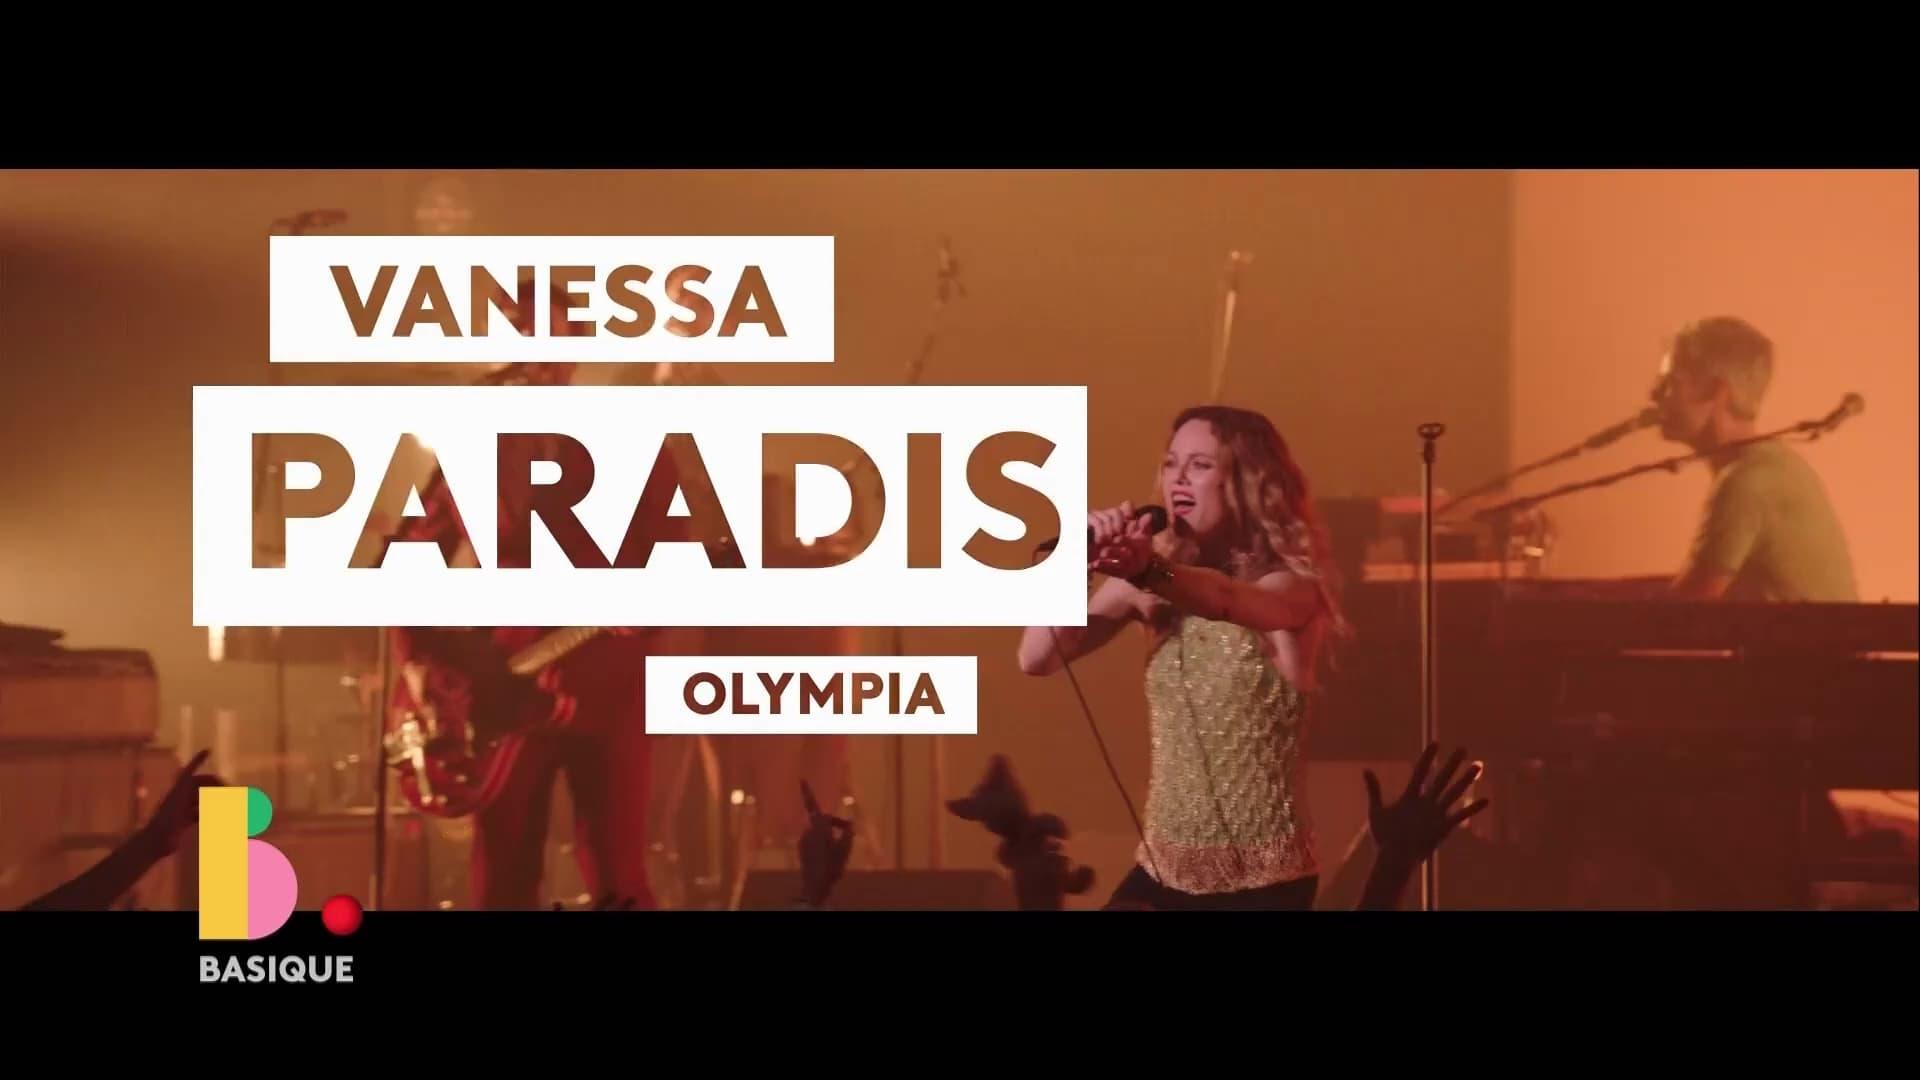 Vanessa Paradis à l'Olympia - Basique, le concert backdrop